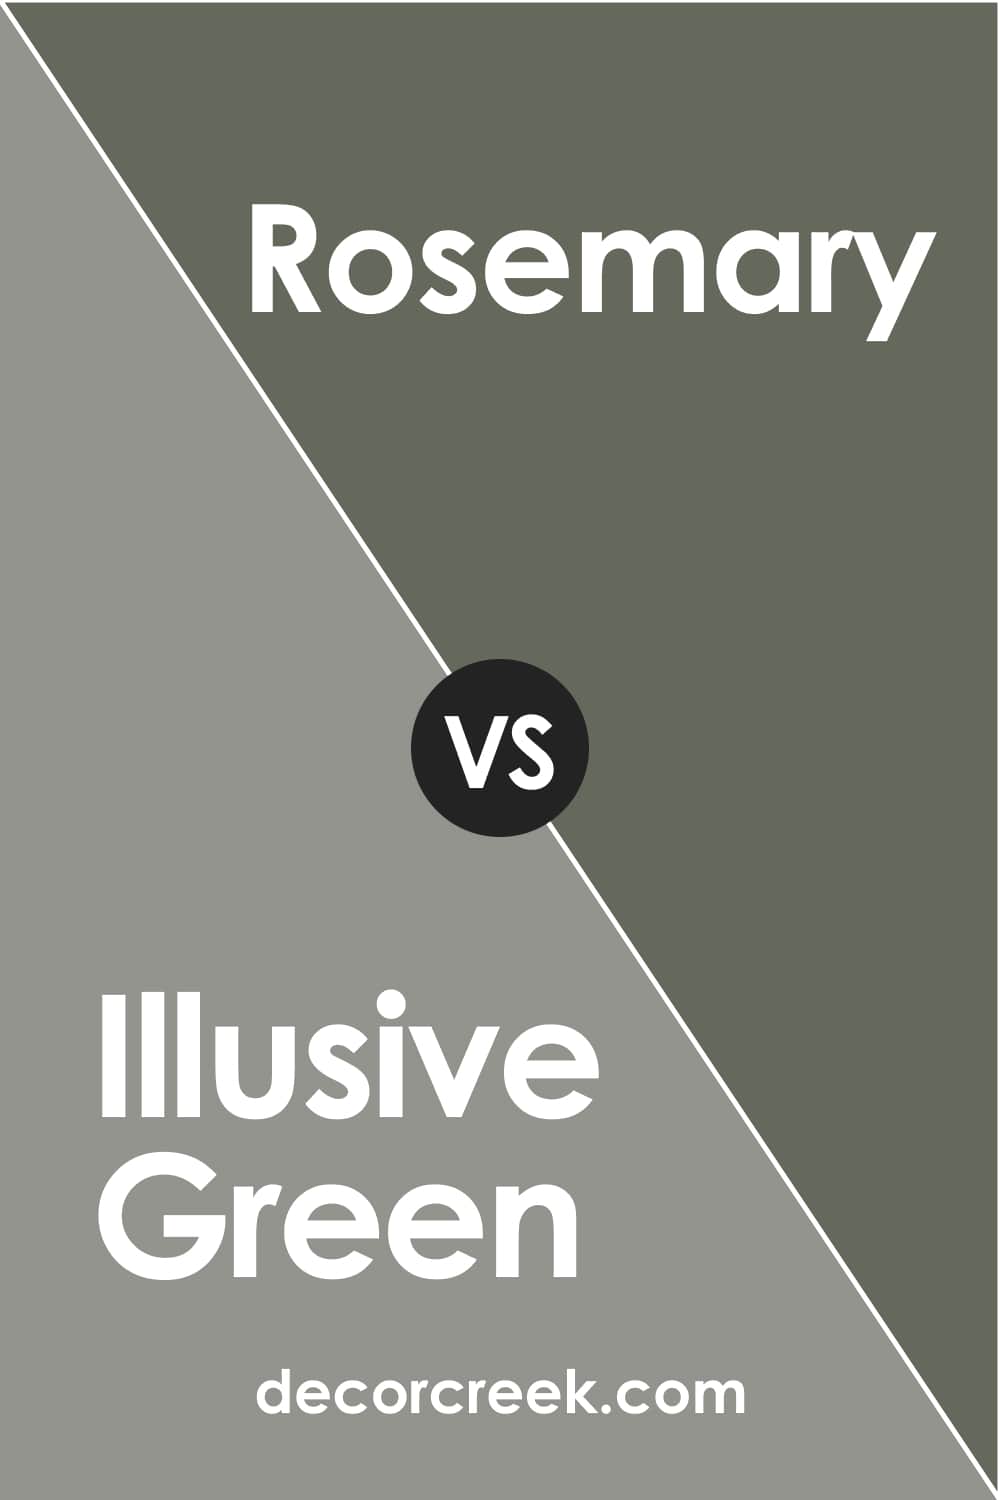 Illusive Green vs Rosemary